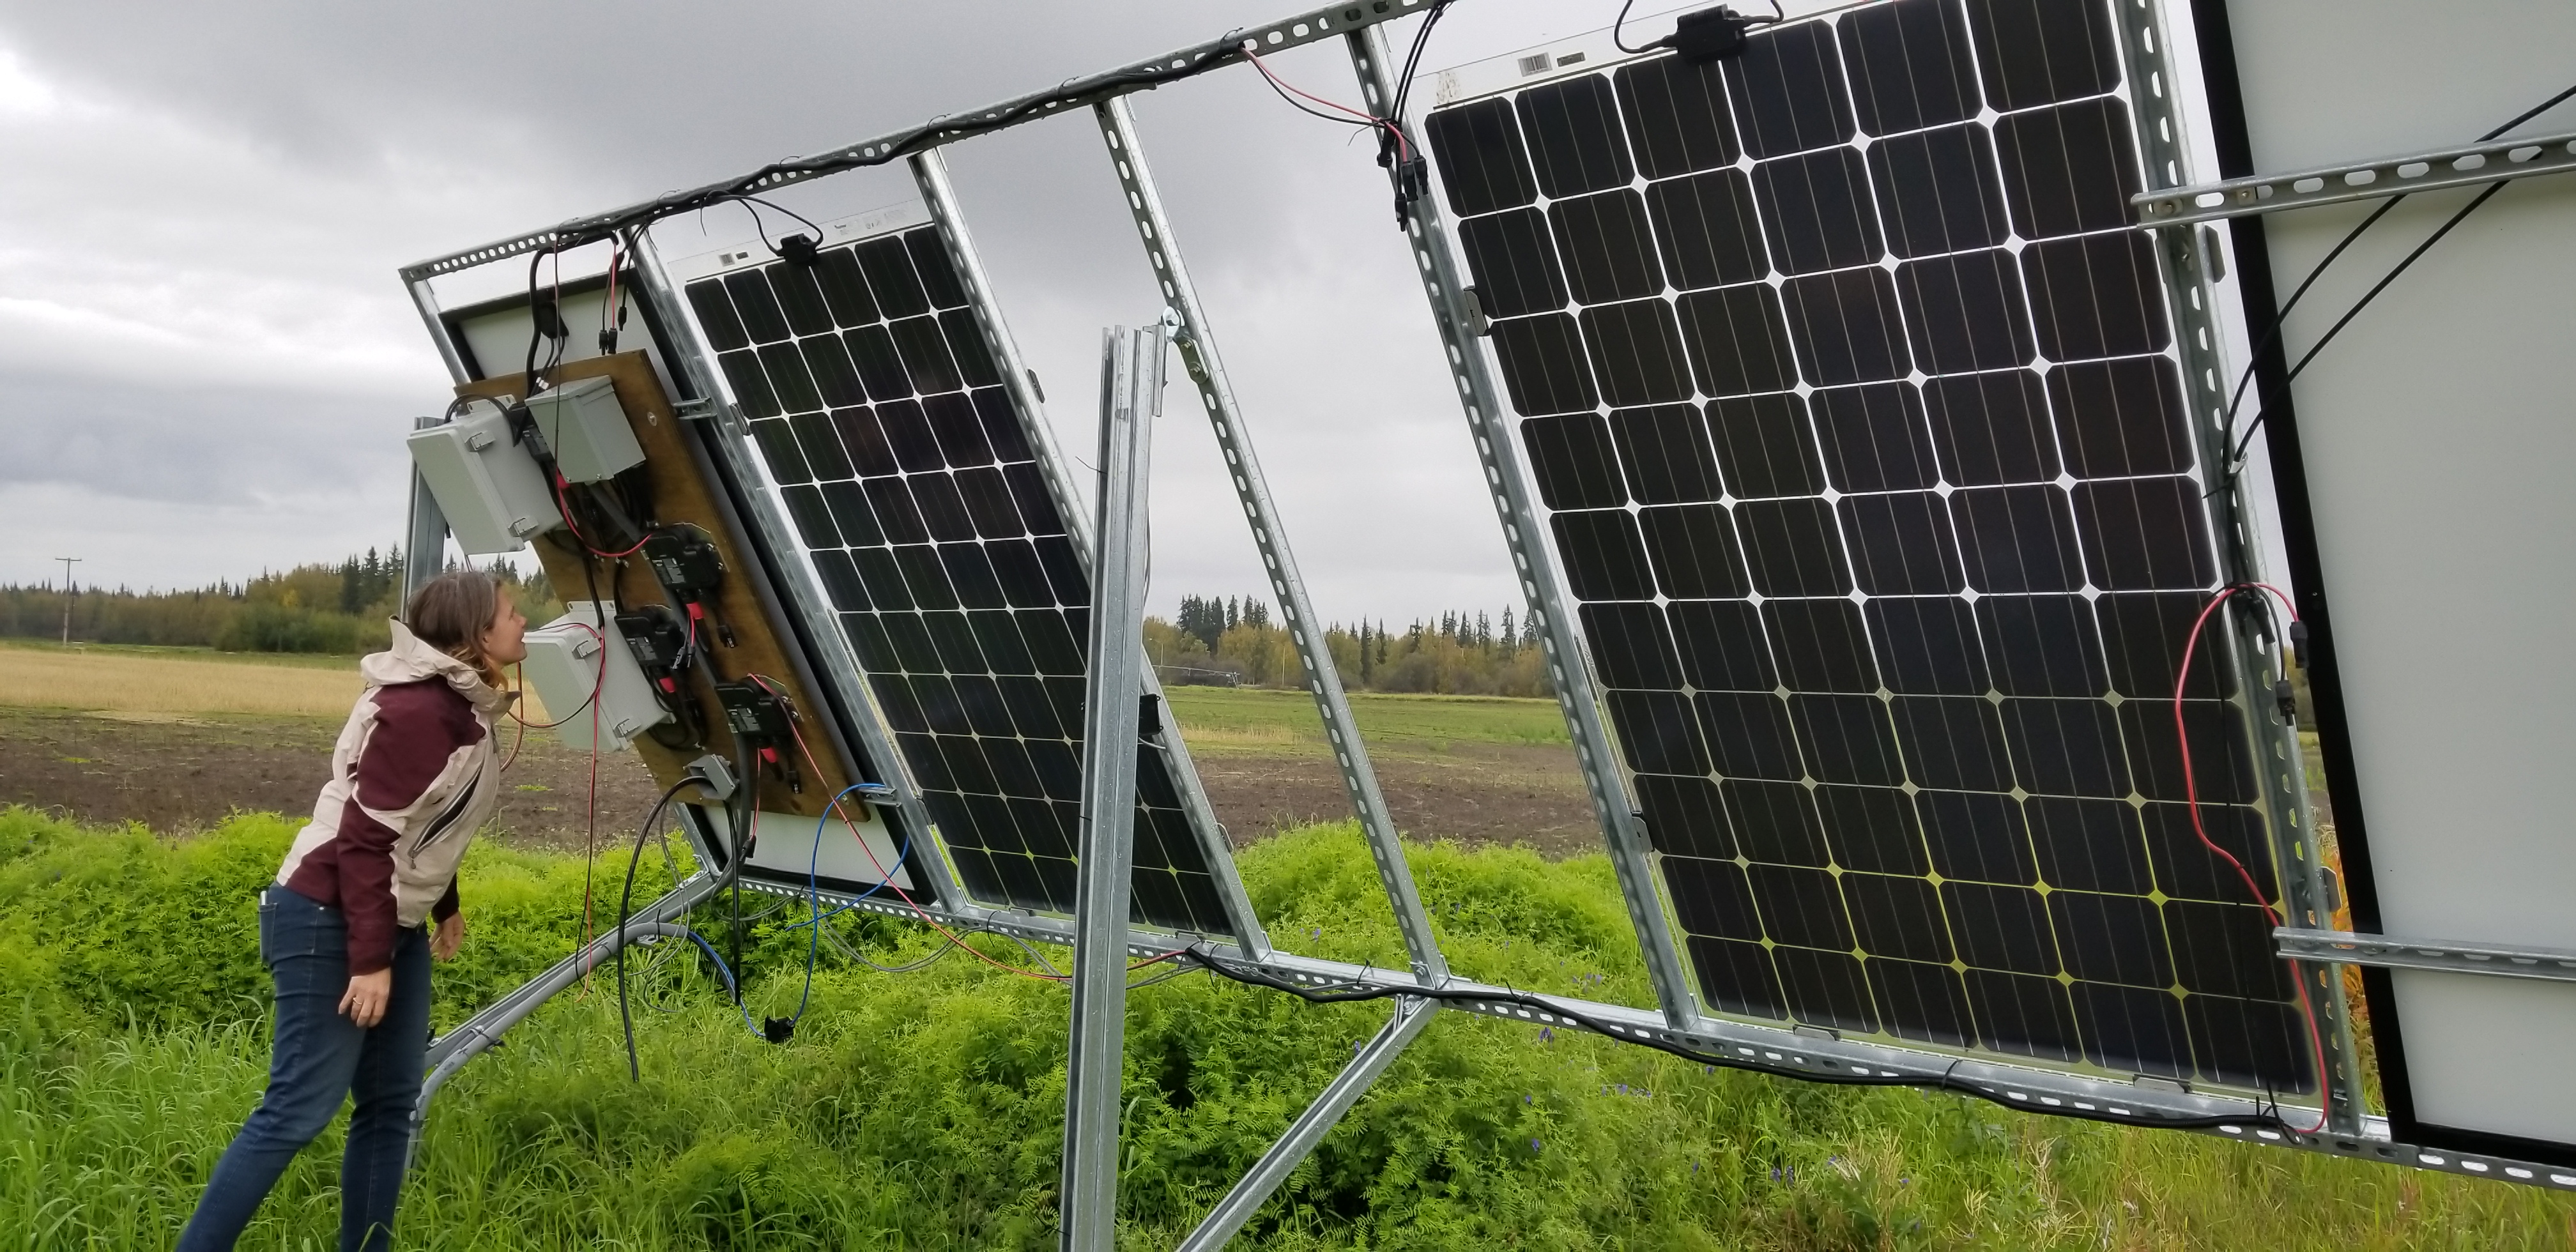 ACEP Researchers Attend Bifacial Solar PV Workshop in Colorado